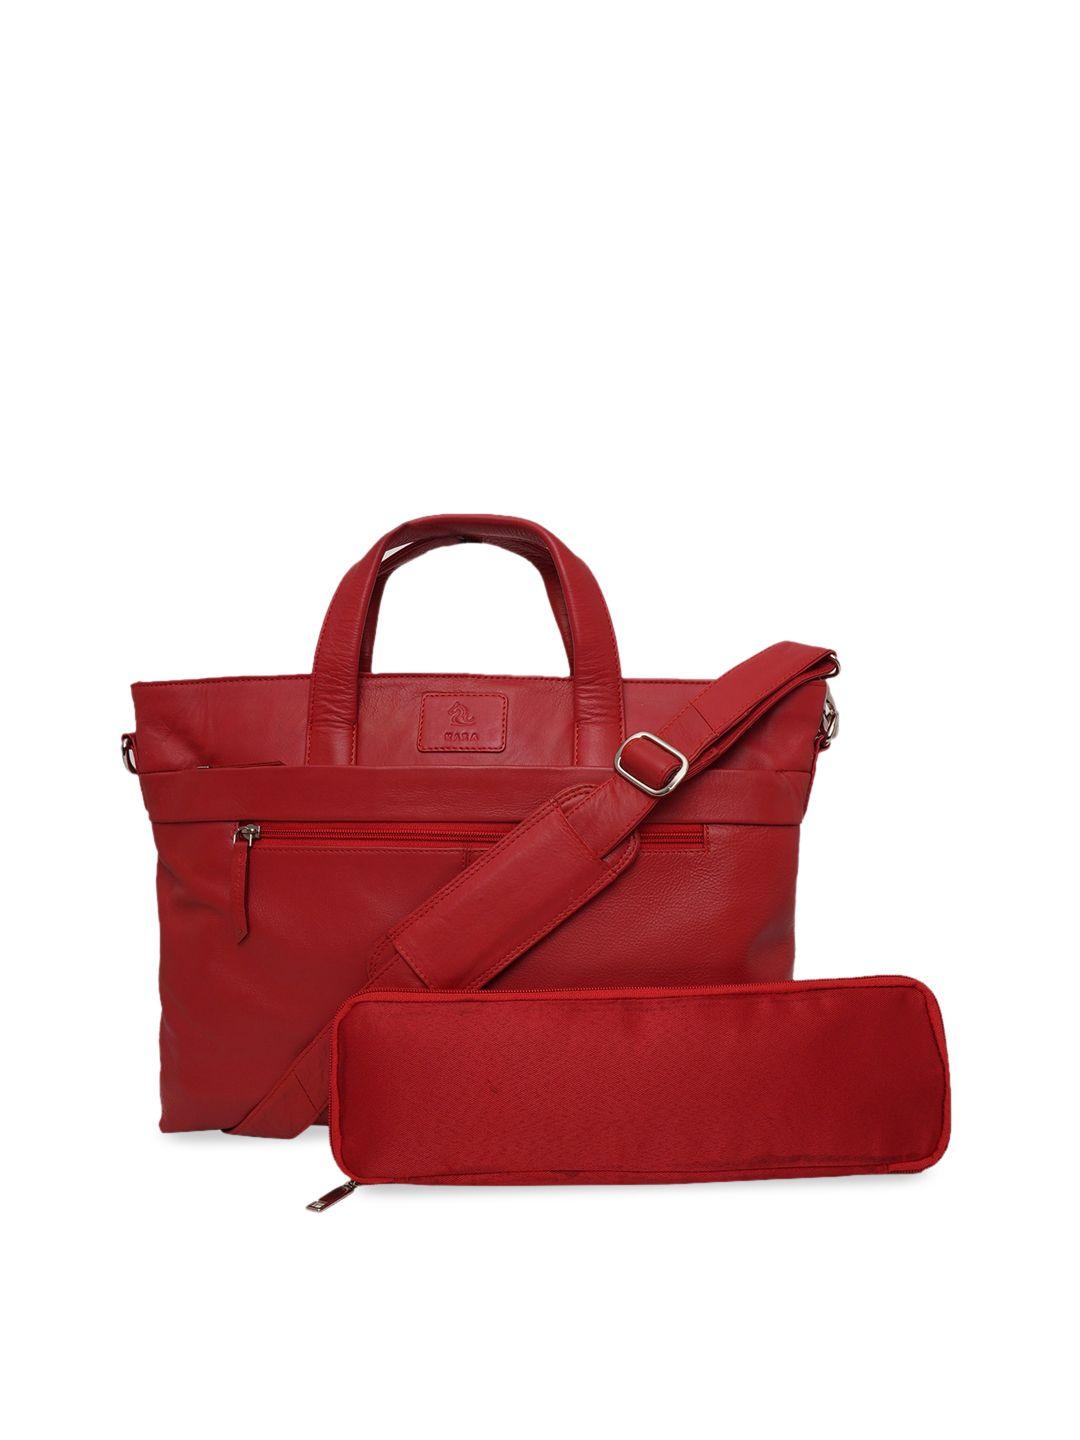 kara red solid leather handheld bag